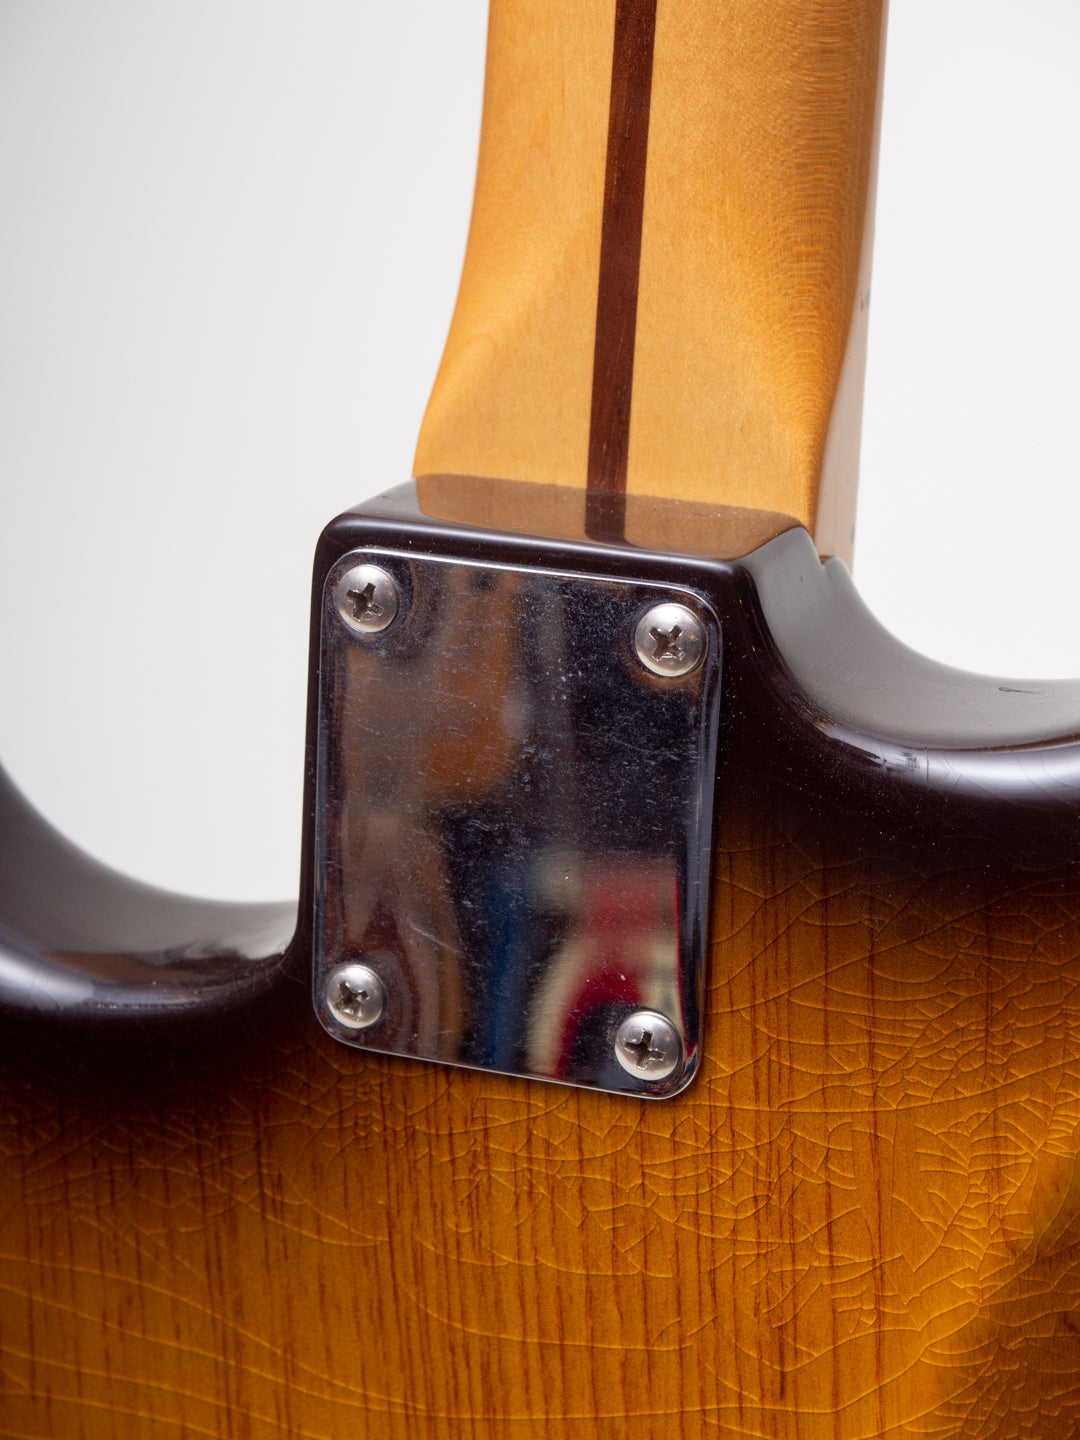 2004 Fender Masterbuilt 50th Anniversary 1954 Stratocaster SN: 4301